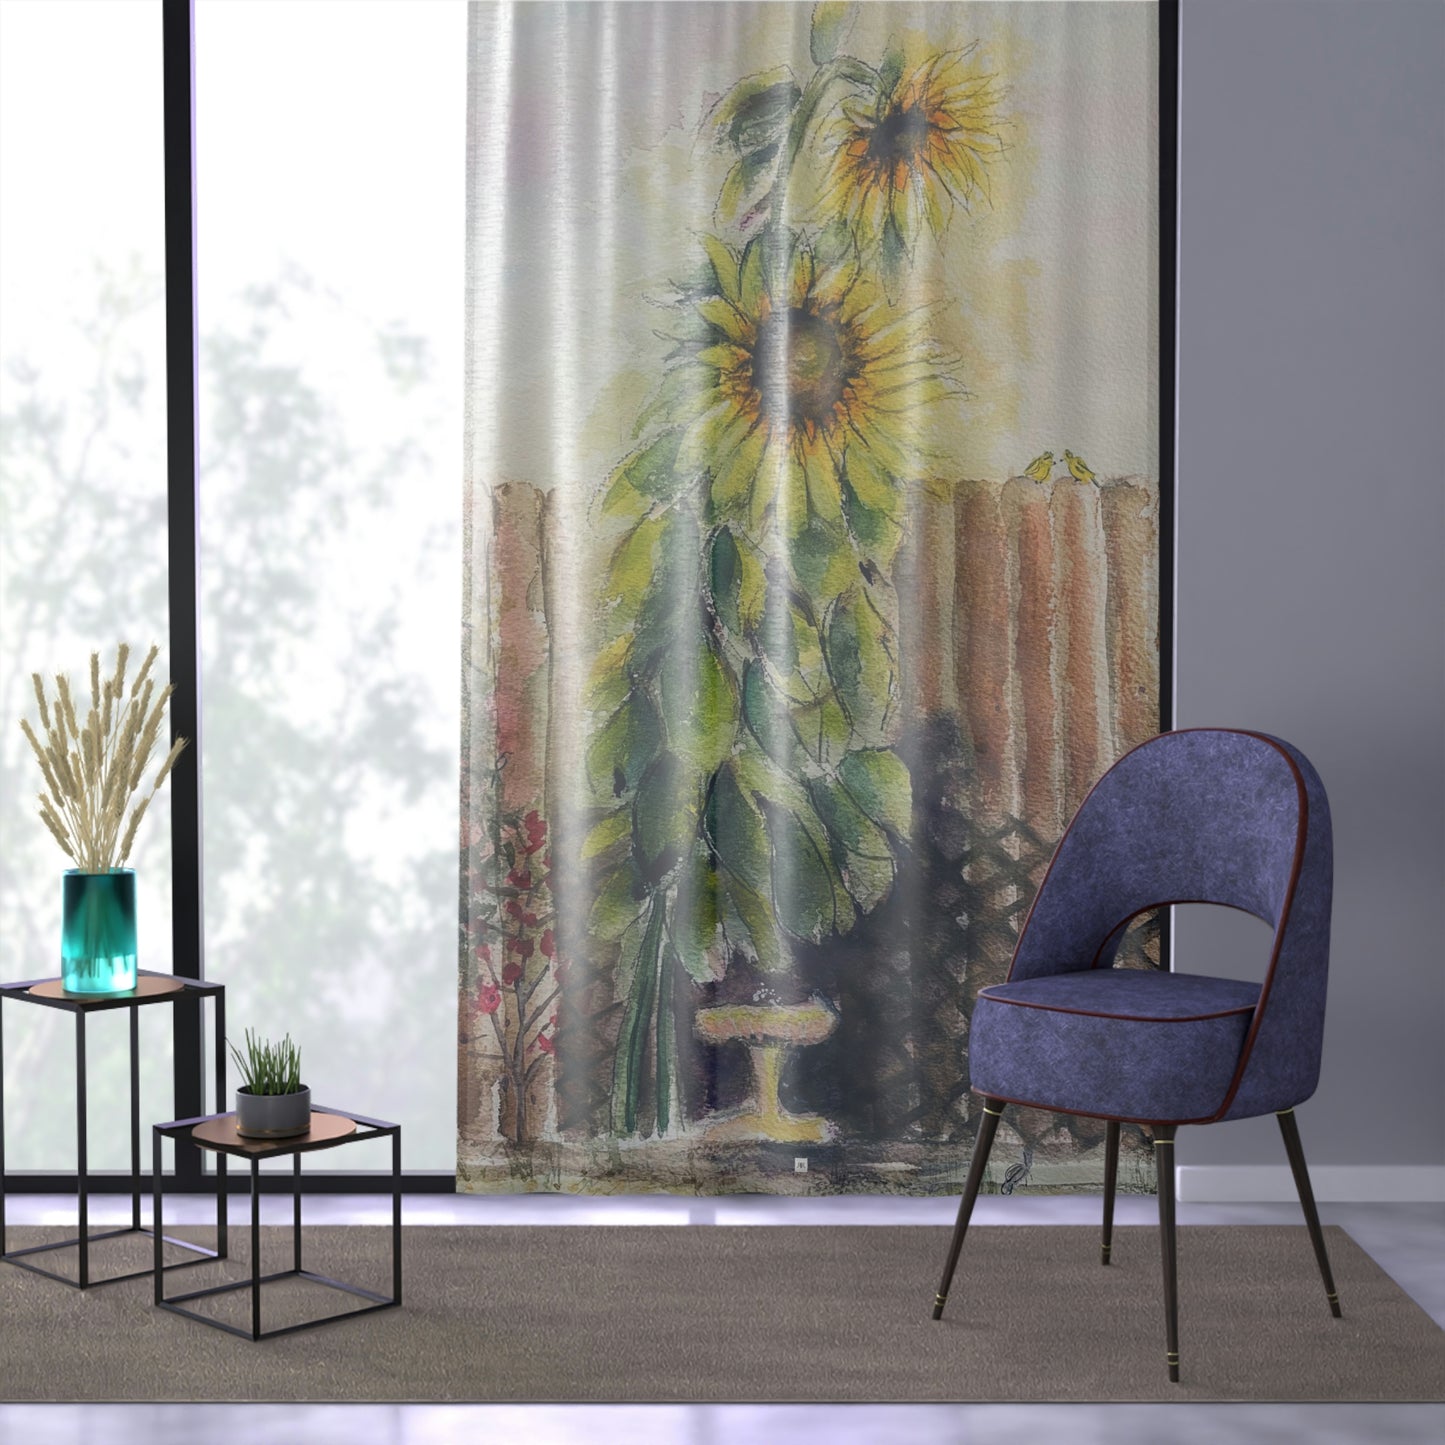 Mammoth Sunflowers 84 x 50 inch Sheer Window Curtain